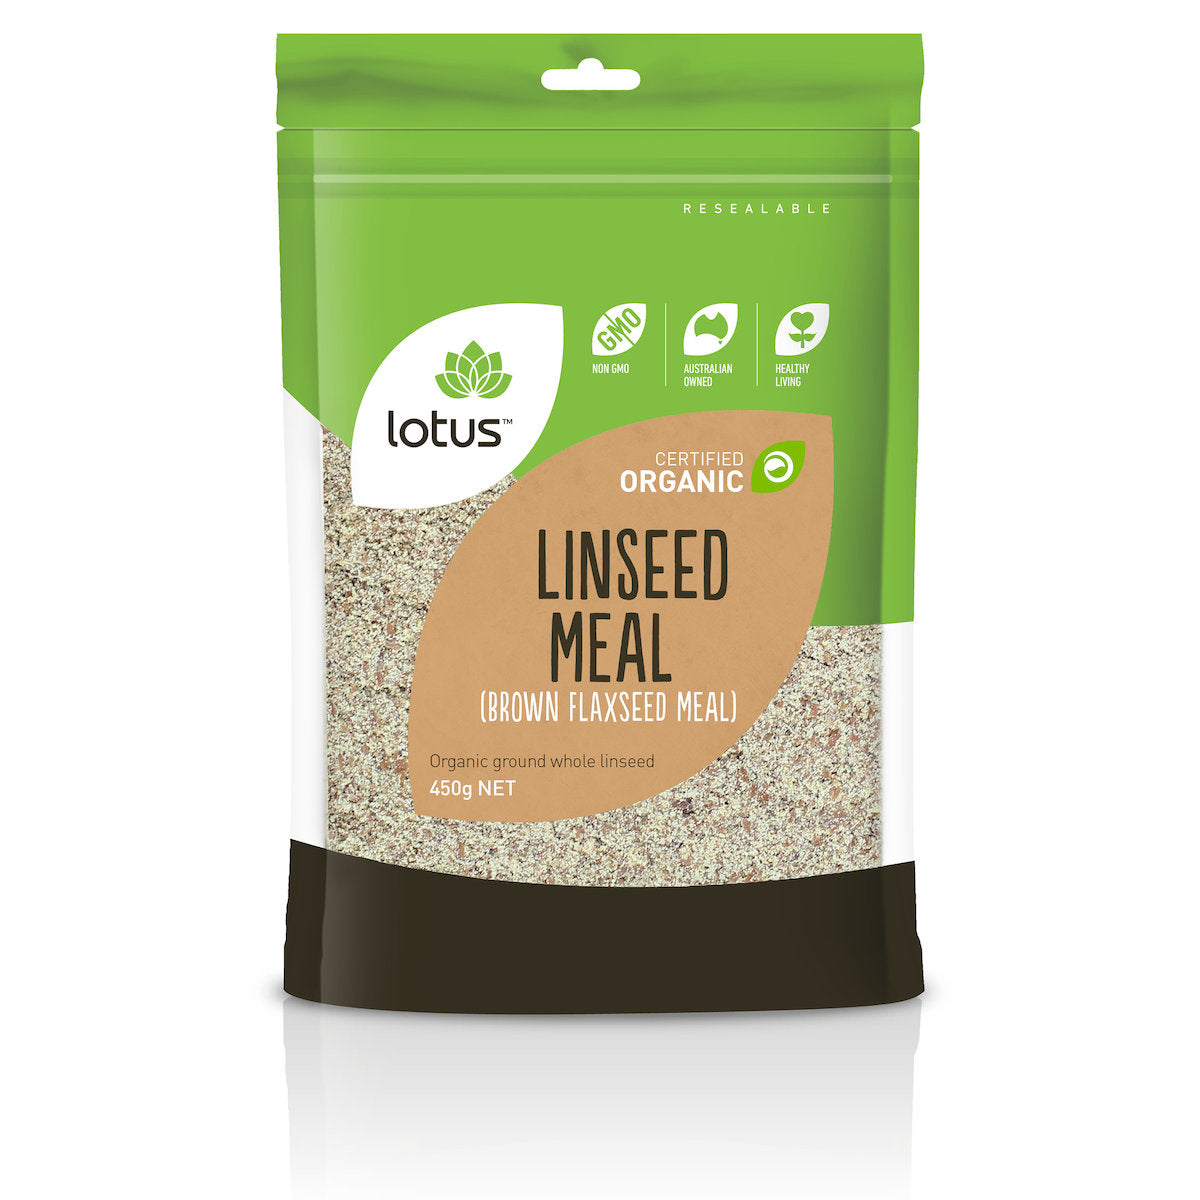 Lotus Organic Linseed Meal (Brown Flaxseed Meal)